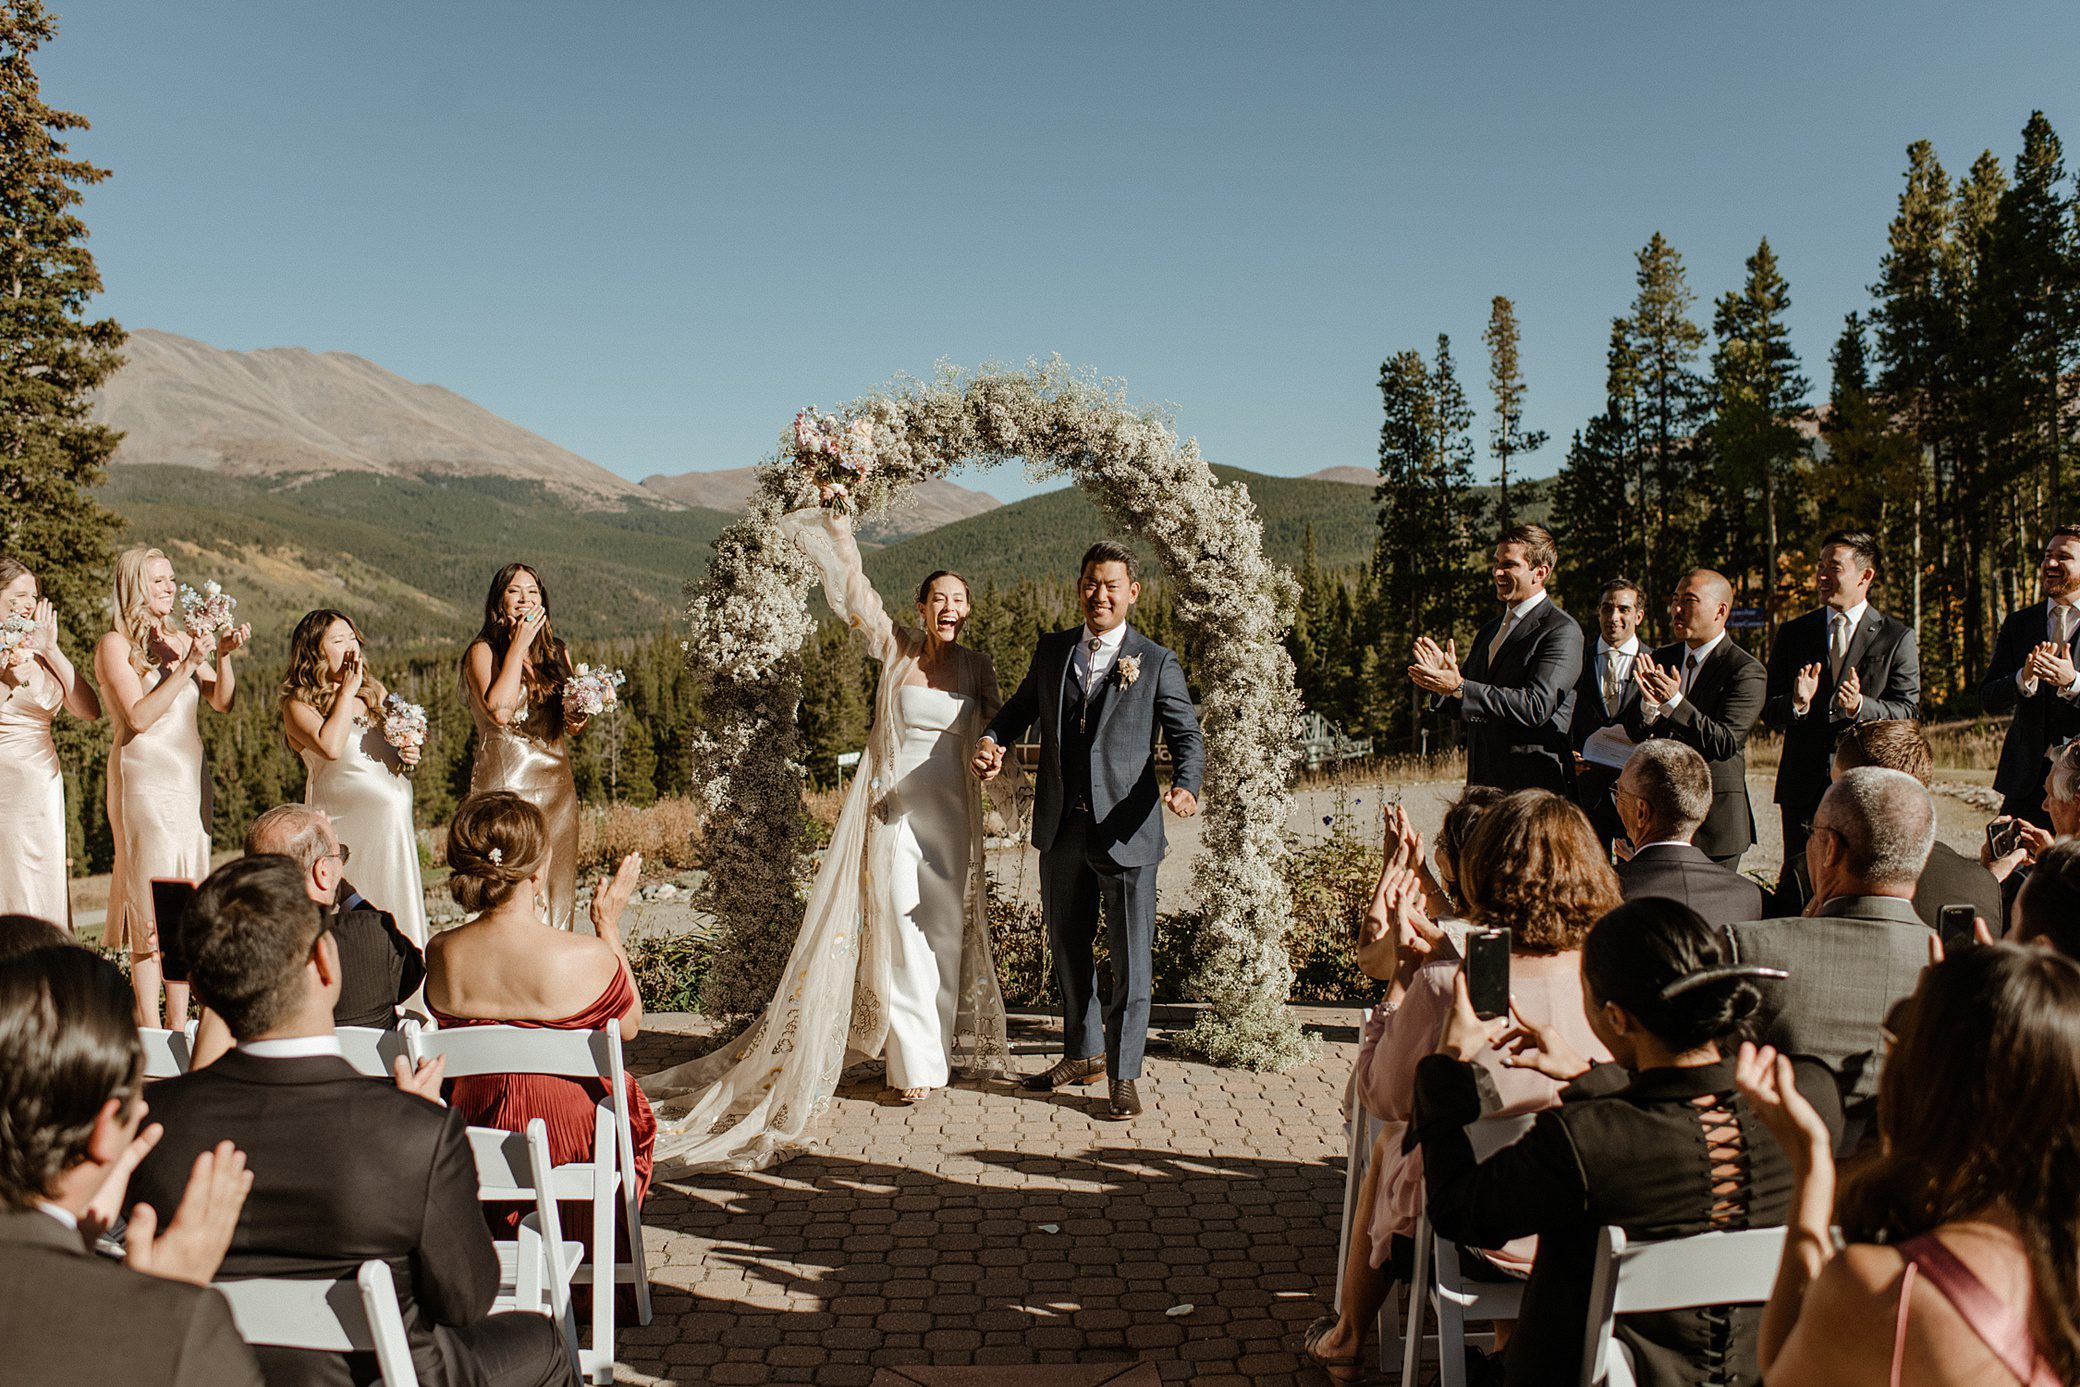 A bride and groom celebrate their wedding ceremony at Ten Mile Station in Breckenridge, Colorado